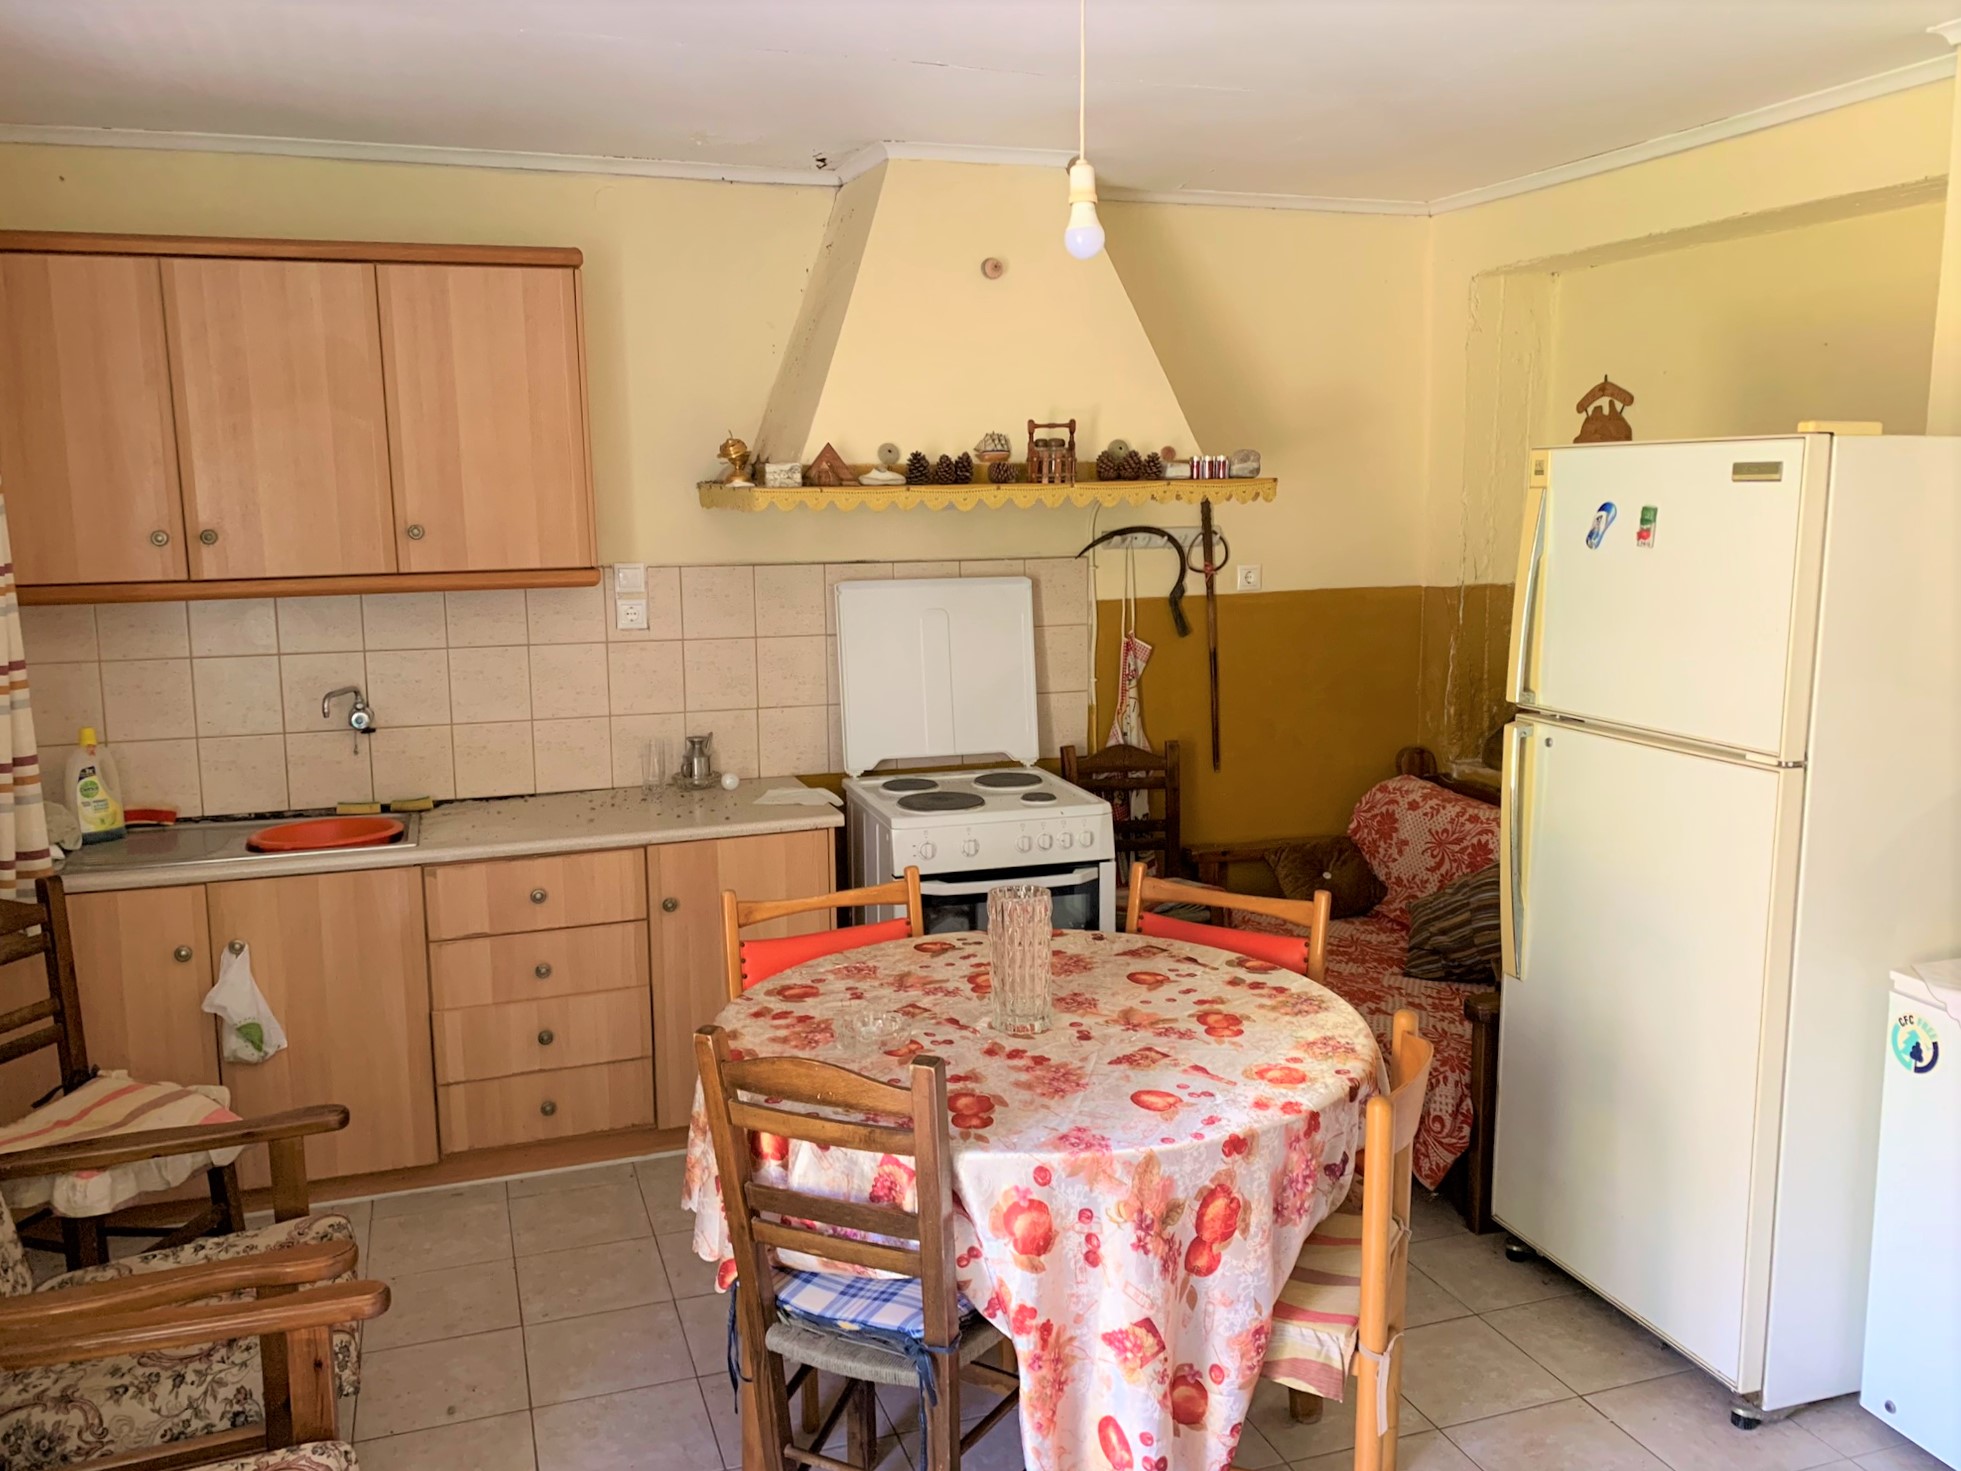 Kitchen of house for sale on Ithaca Greece, Perachori